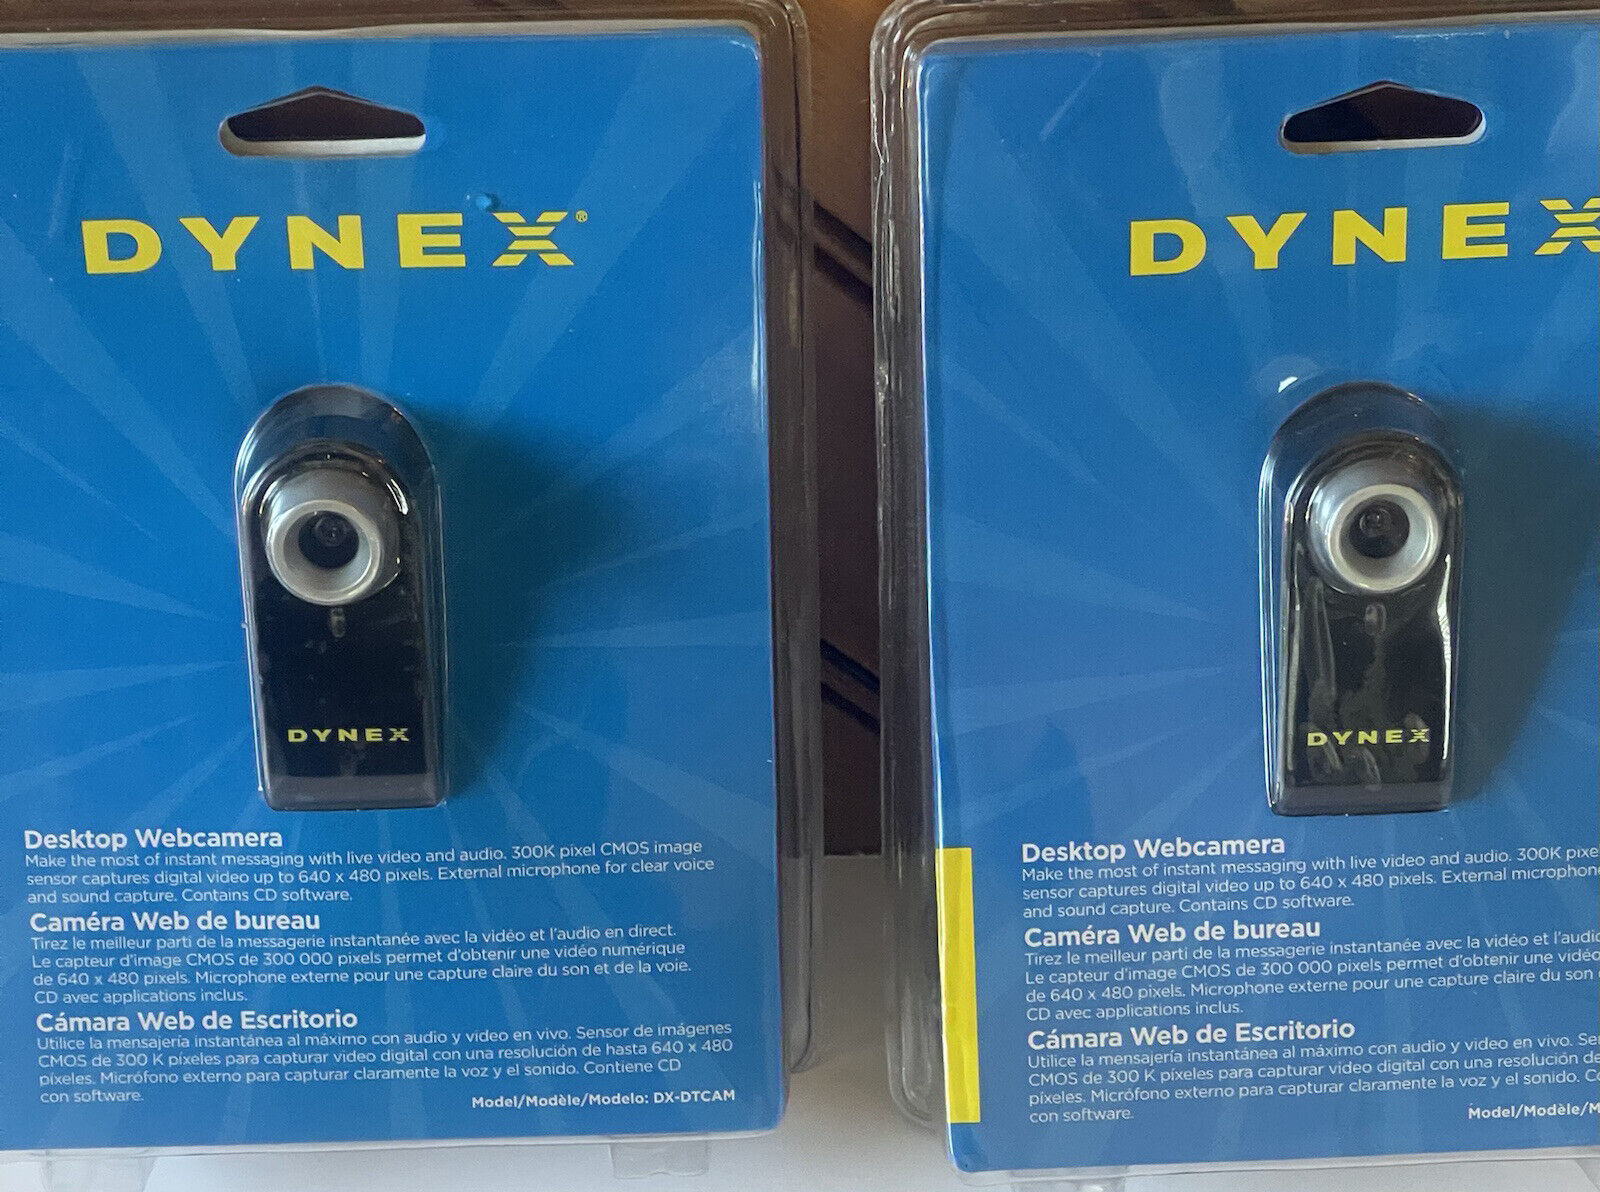  Dynex Desktop Webcameras TWO-New in Sealed Package. DX-DTCAM 300K USB, CD